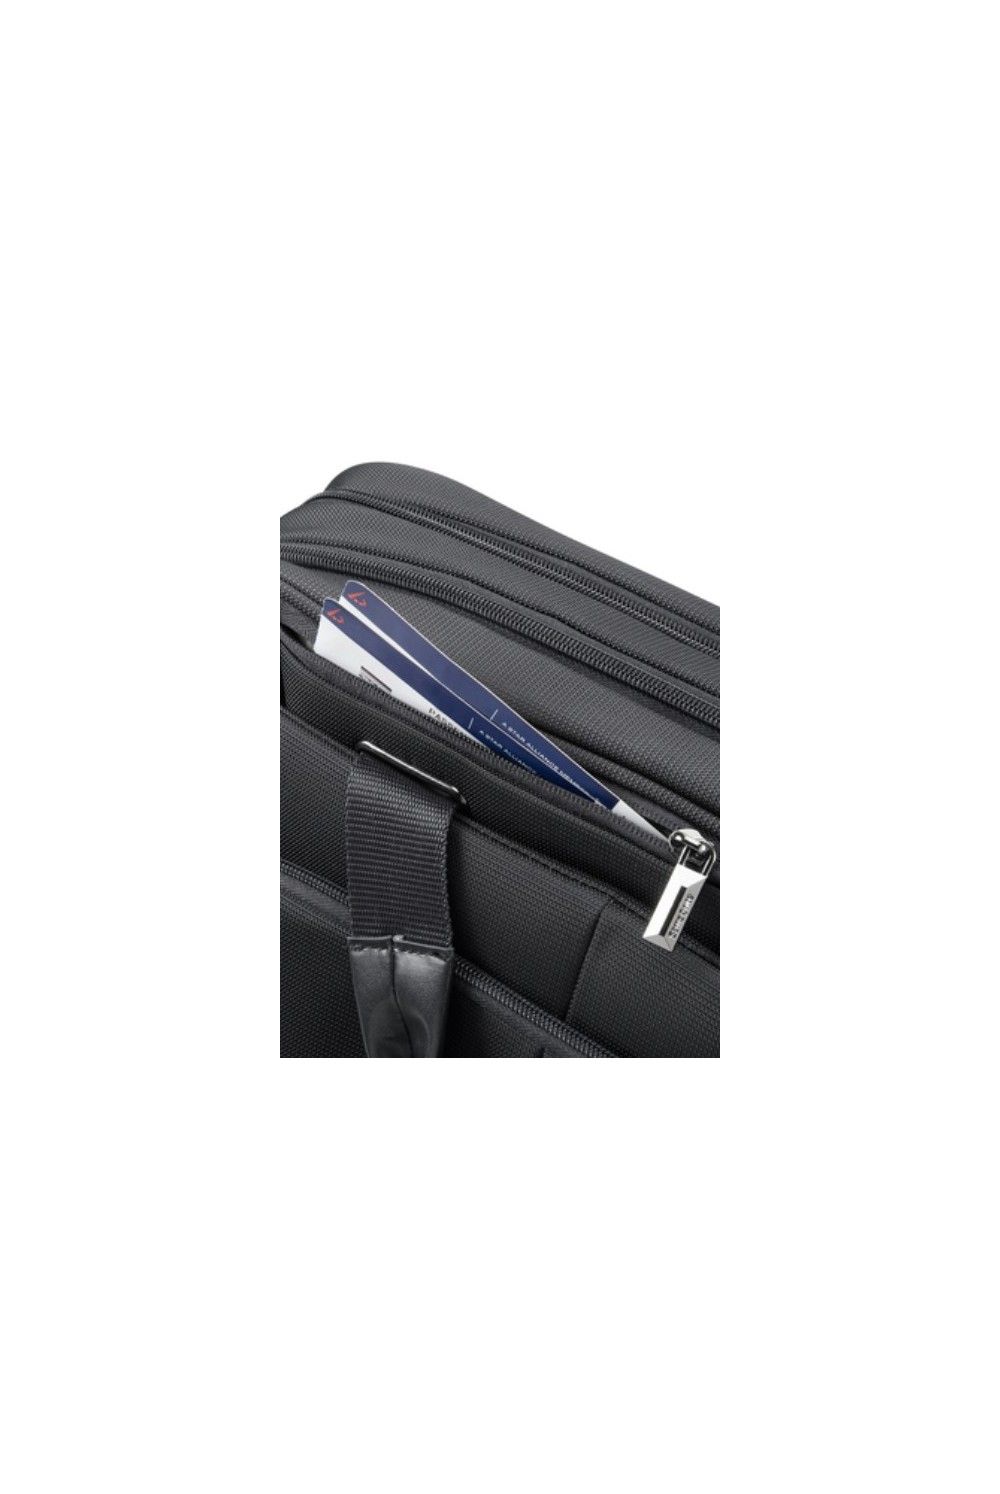 Samsonite briefcase XBR 15.6 inches 2 compartment